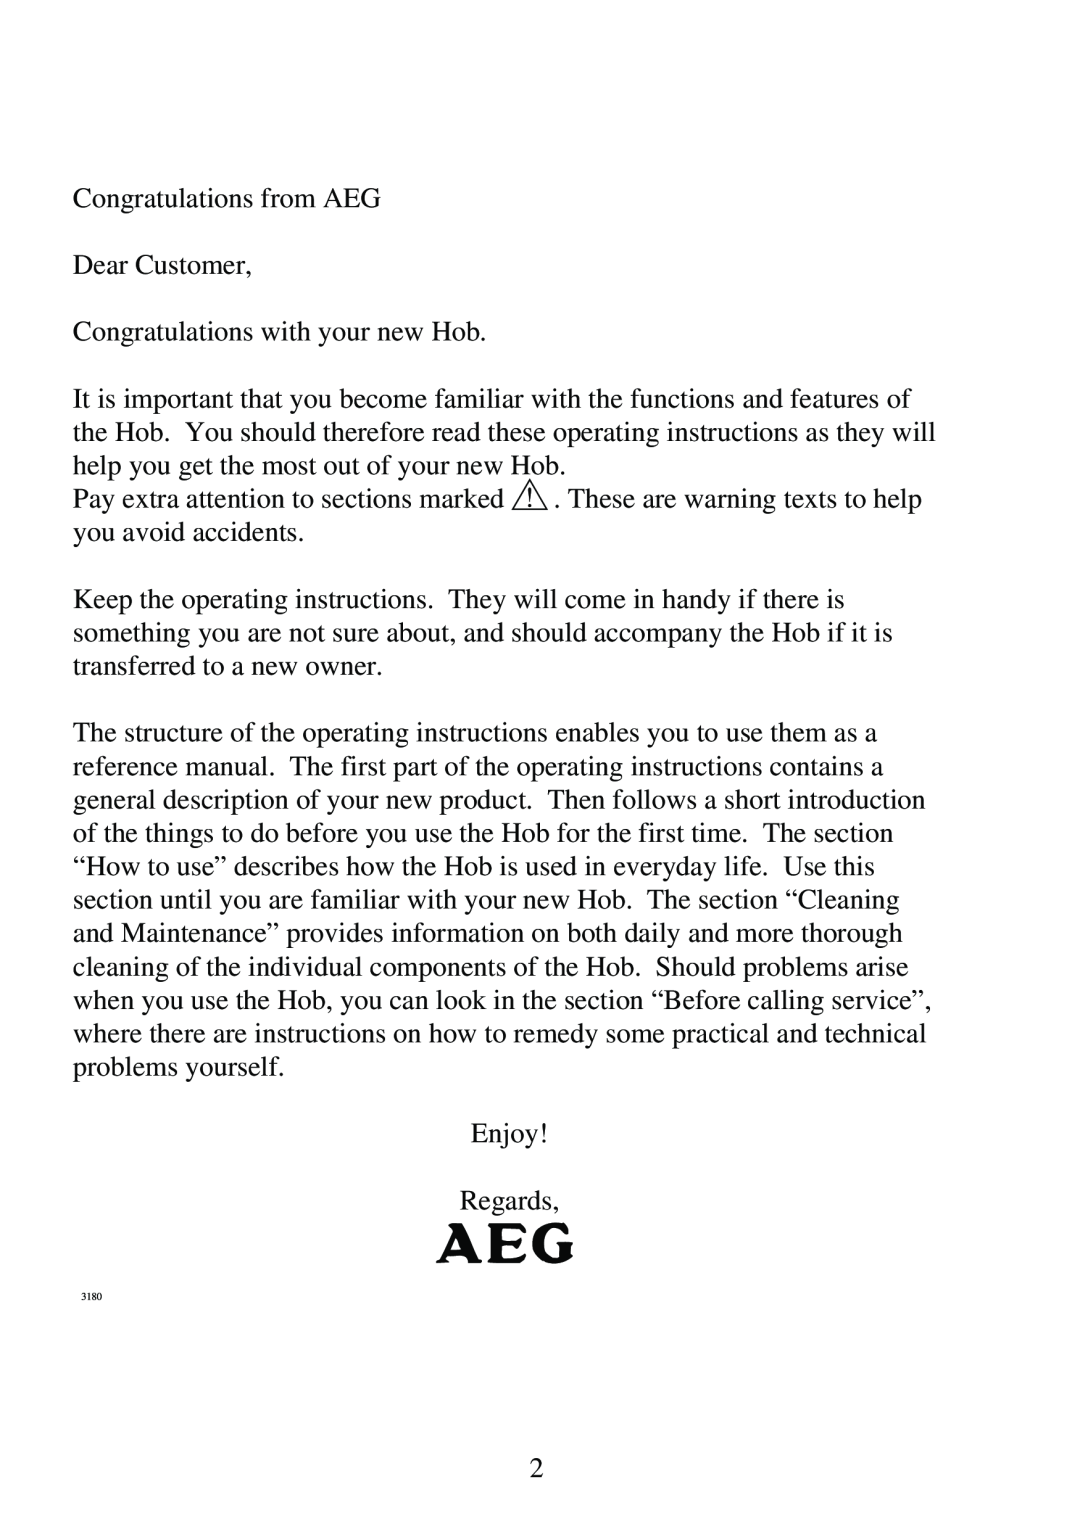 AEG 231GR-M manual Congratulations from AEG Dear Customer, Congratulations with your new Hob, Enjoy Regards 